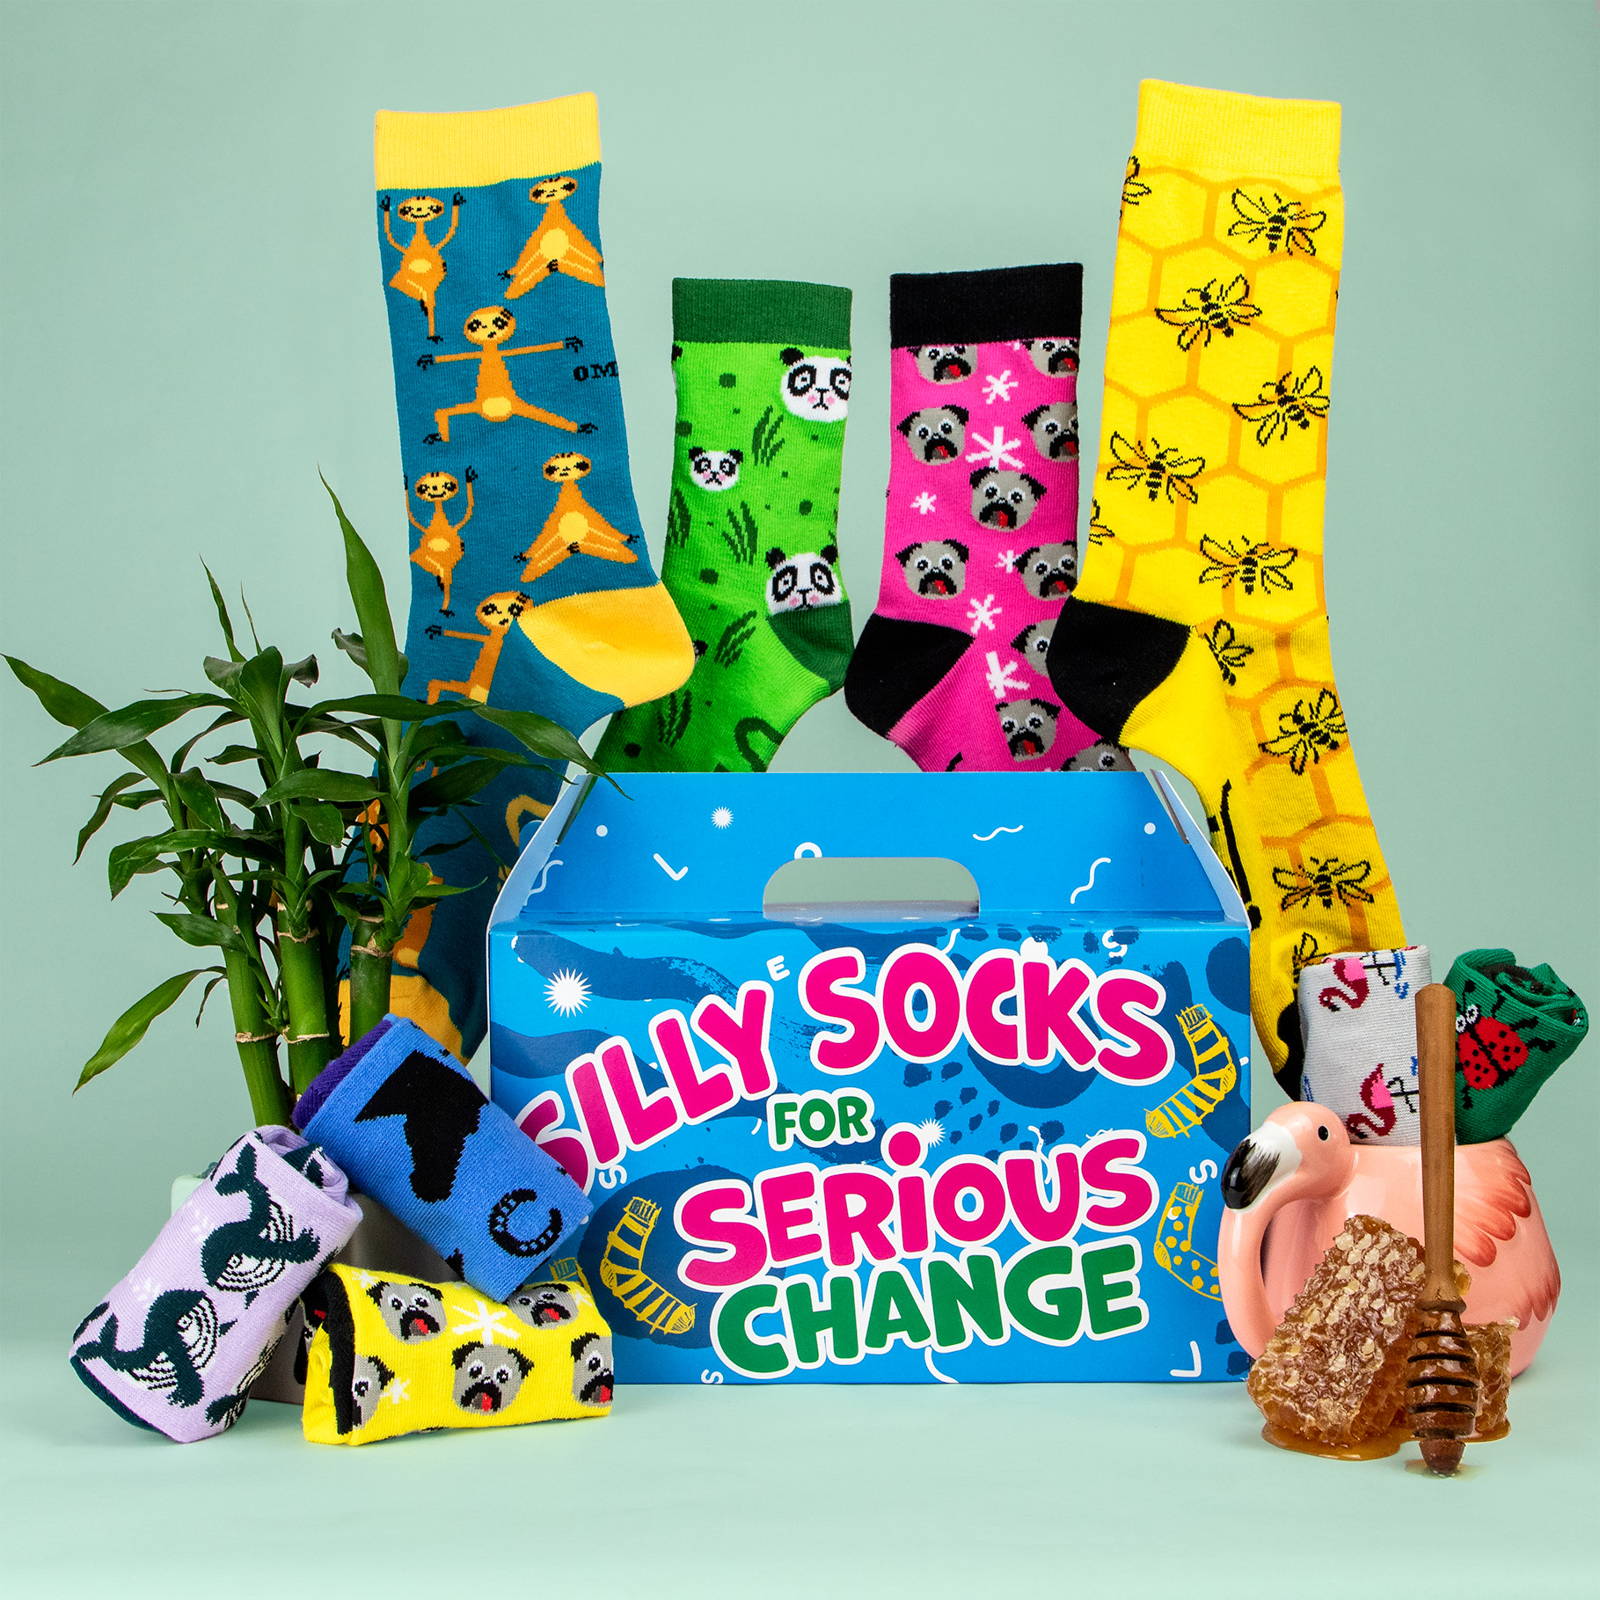 Jolly Soles Animal Fundraiser Sock Box